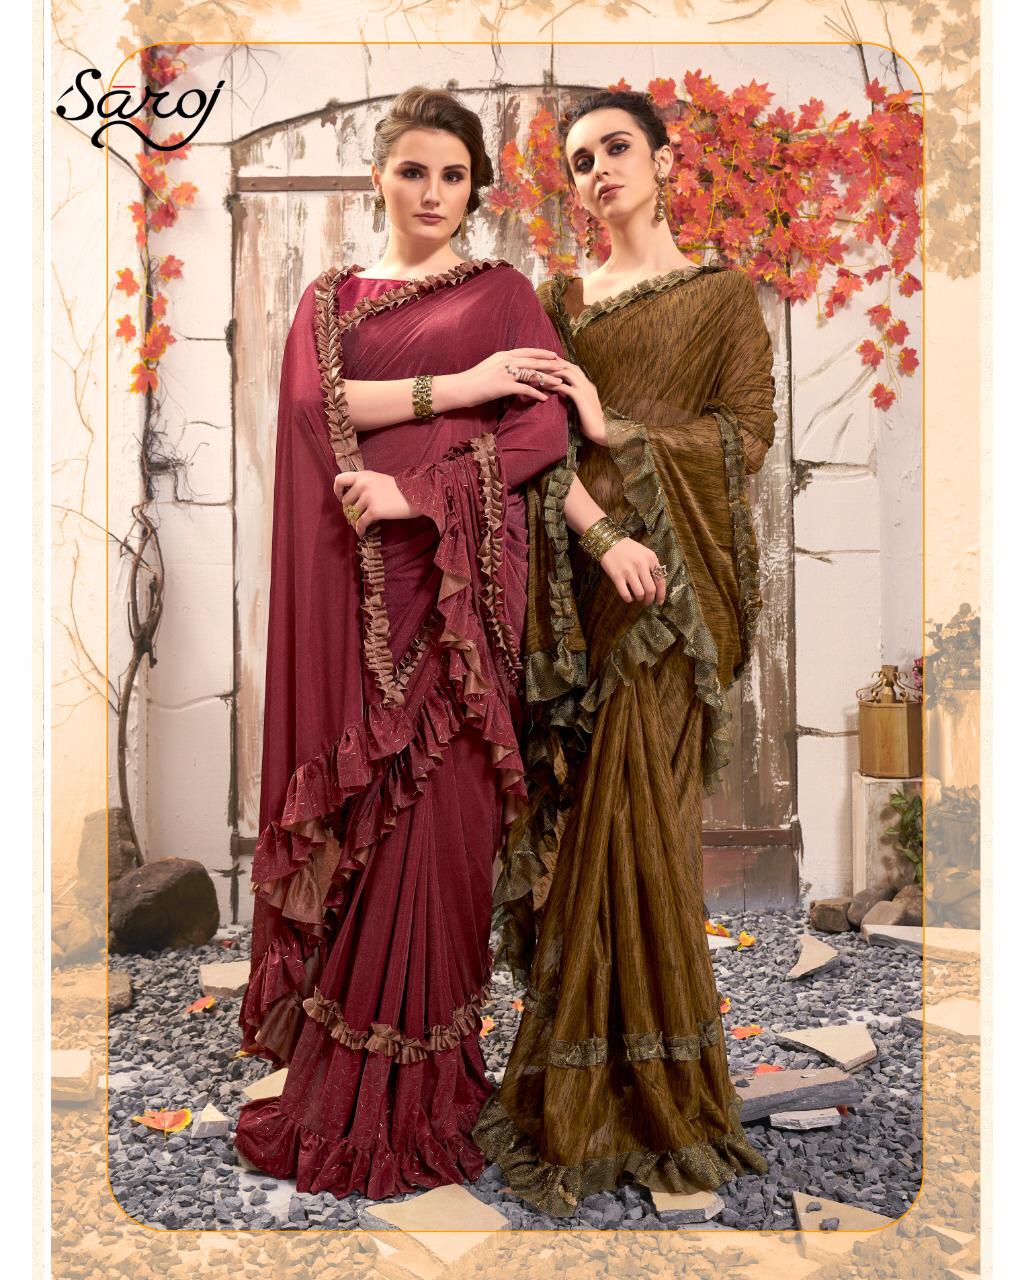 Saroj sandalwood vol-2 astonishing style beautifully designed sarees